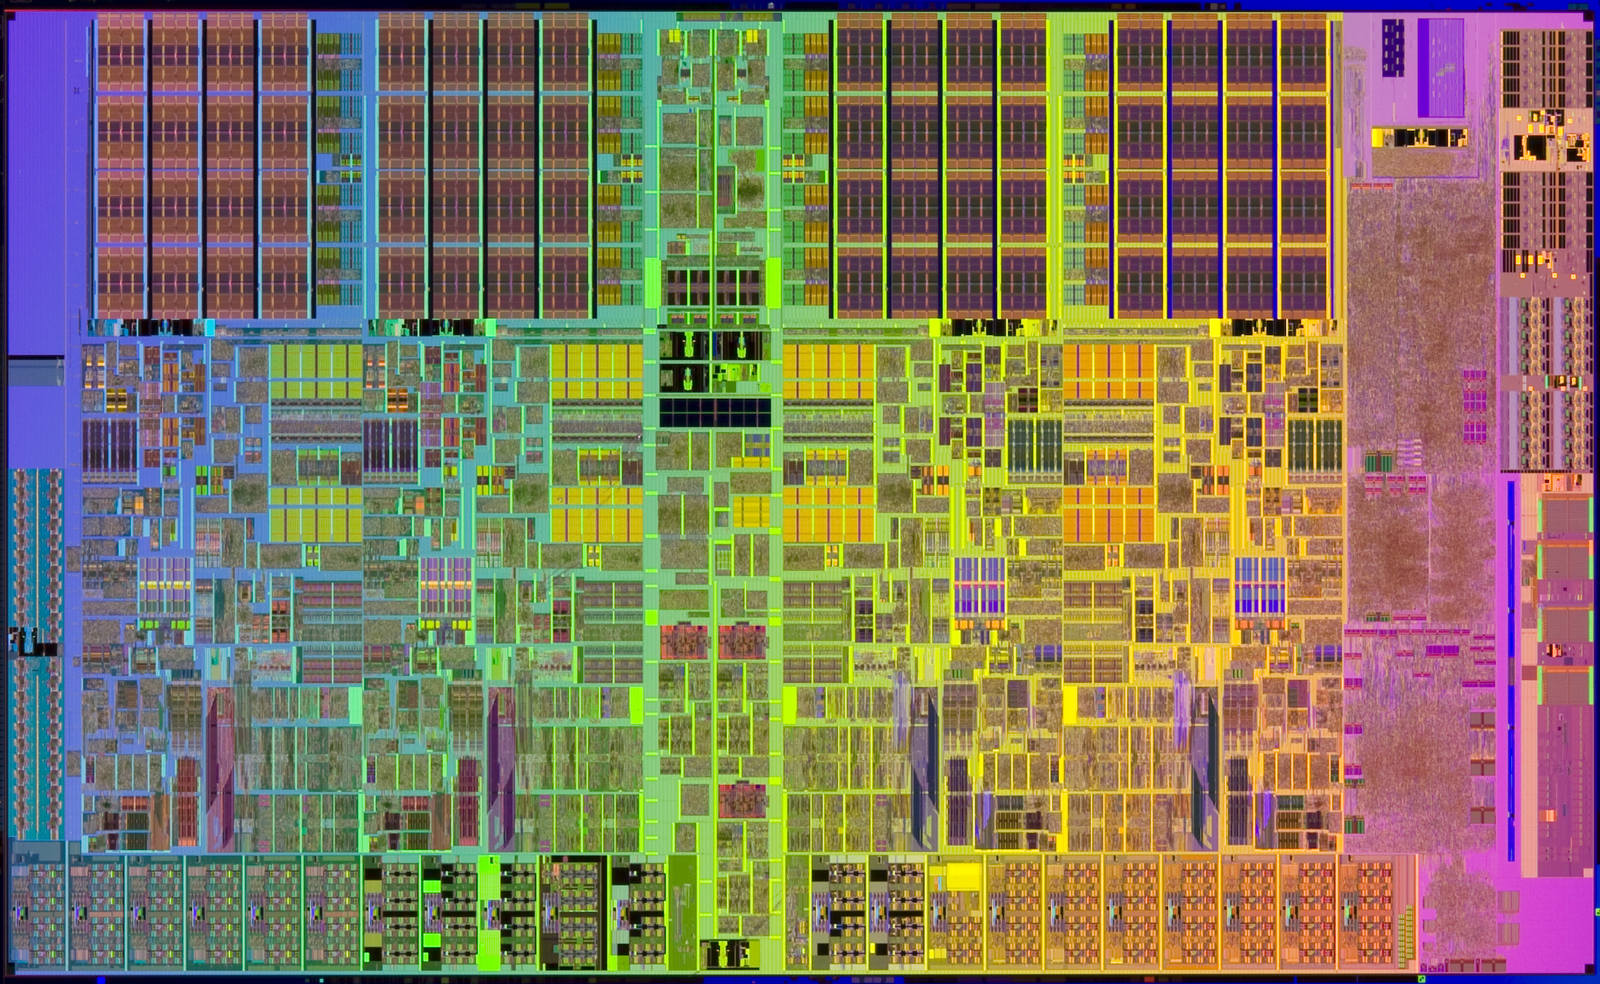 Assorted CPU die images